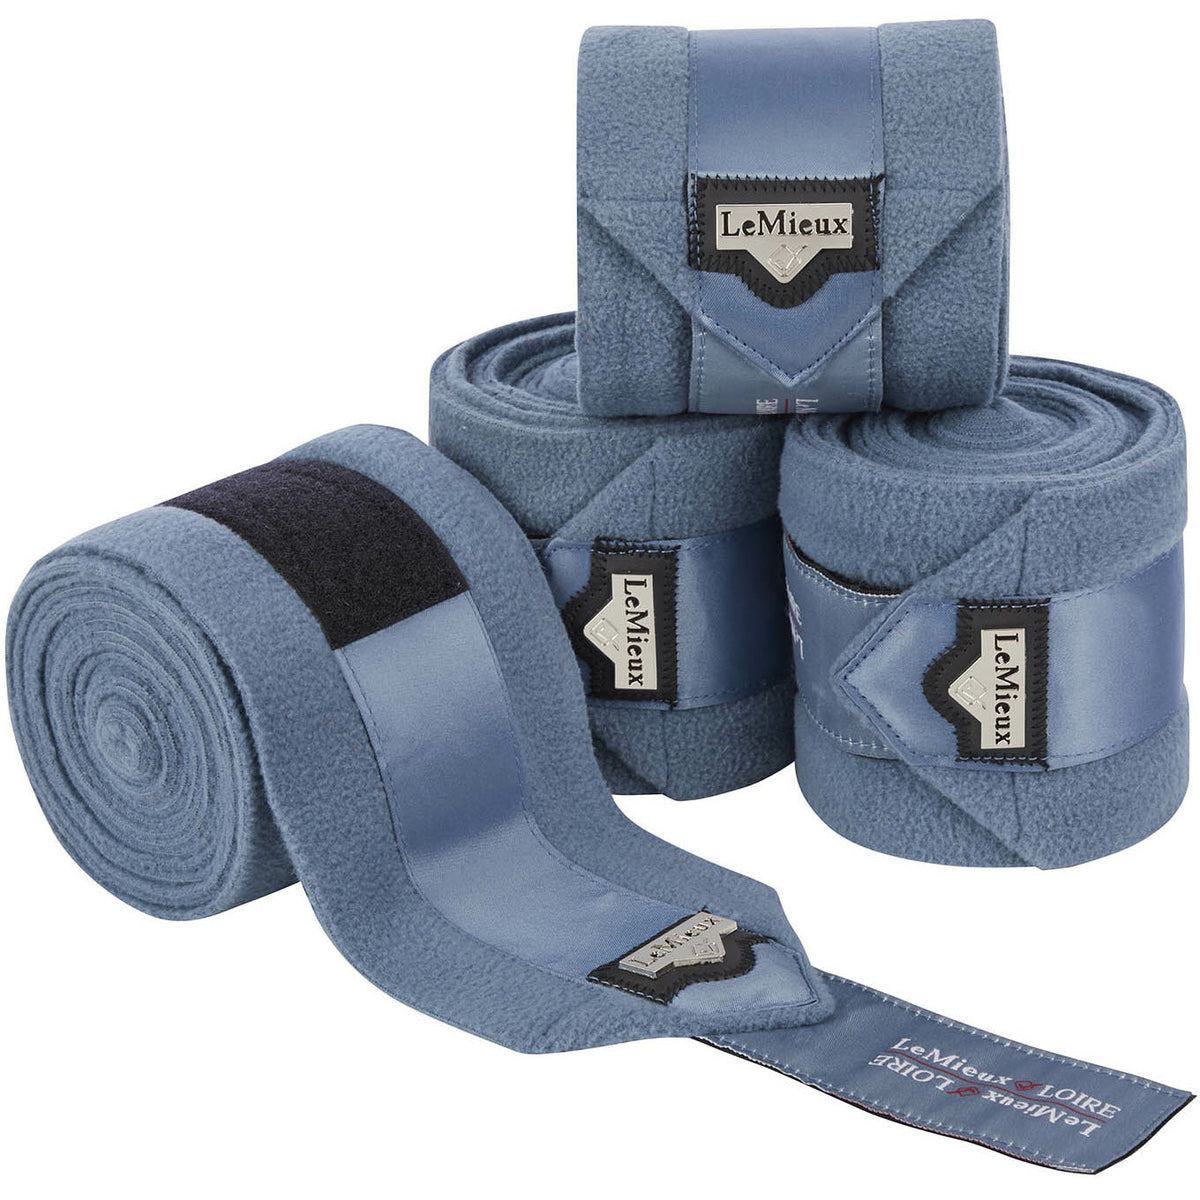 LEMIEUX BOOTS & BANDAGES LARGE / ICE BLUE LeMieux Loire Polo Bandages  - Ice Blue